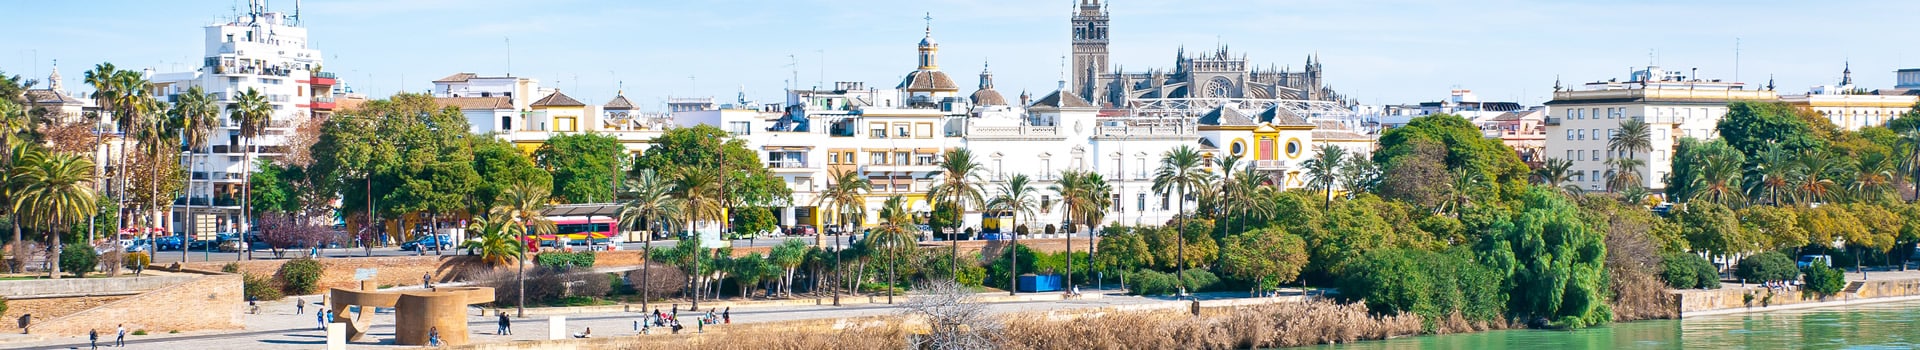 Majorca - Seville